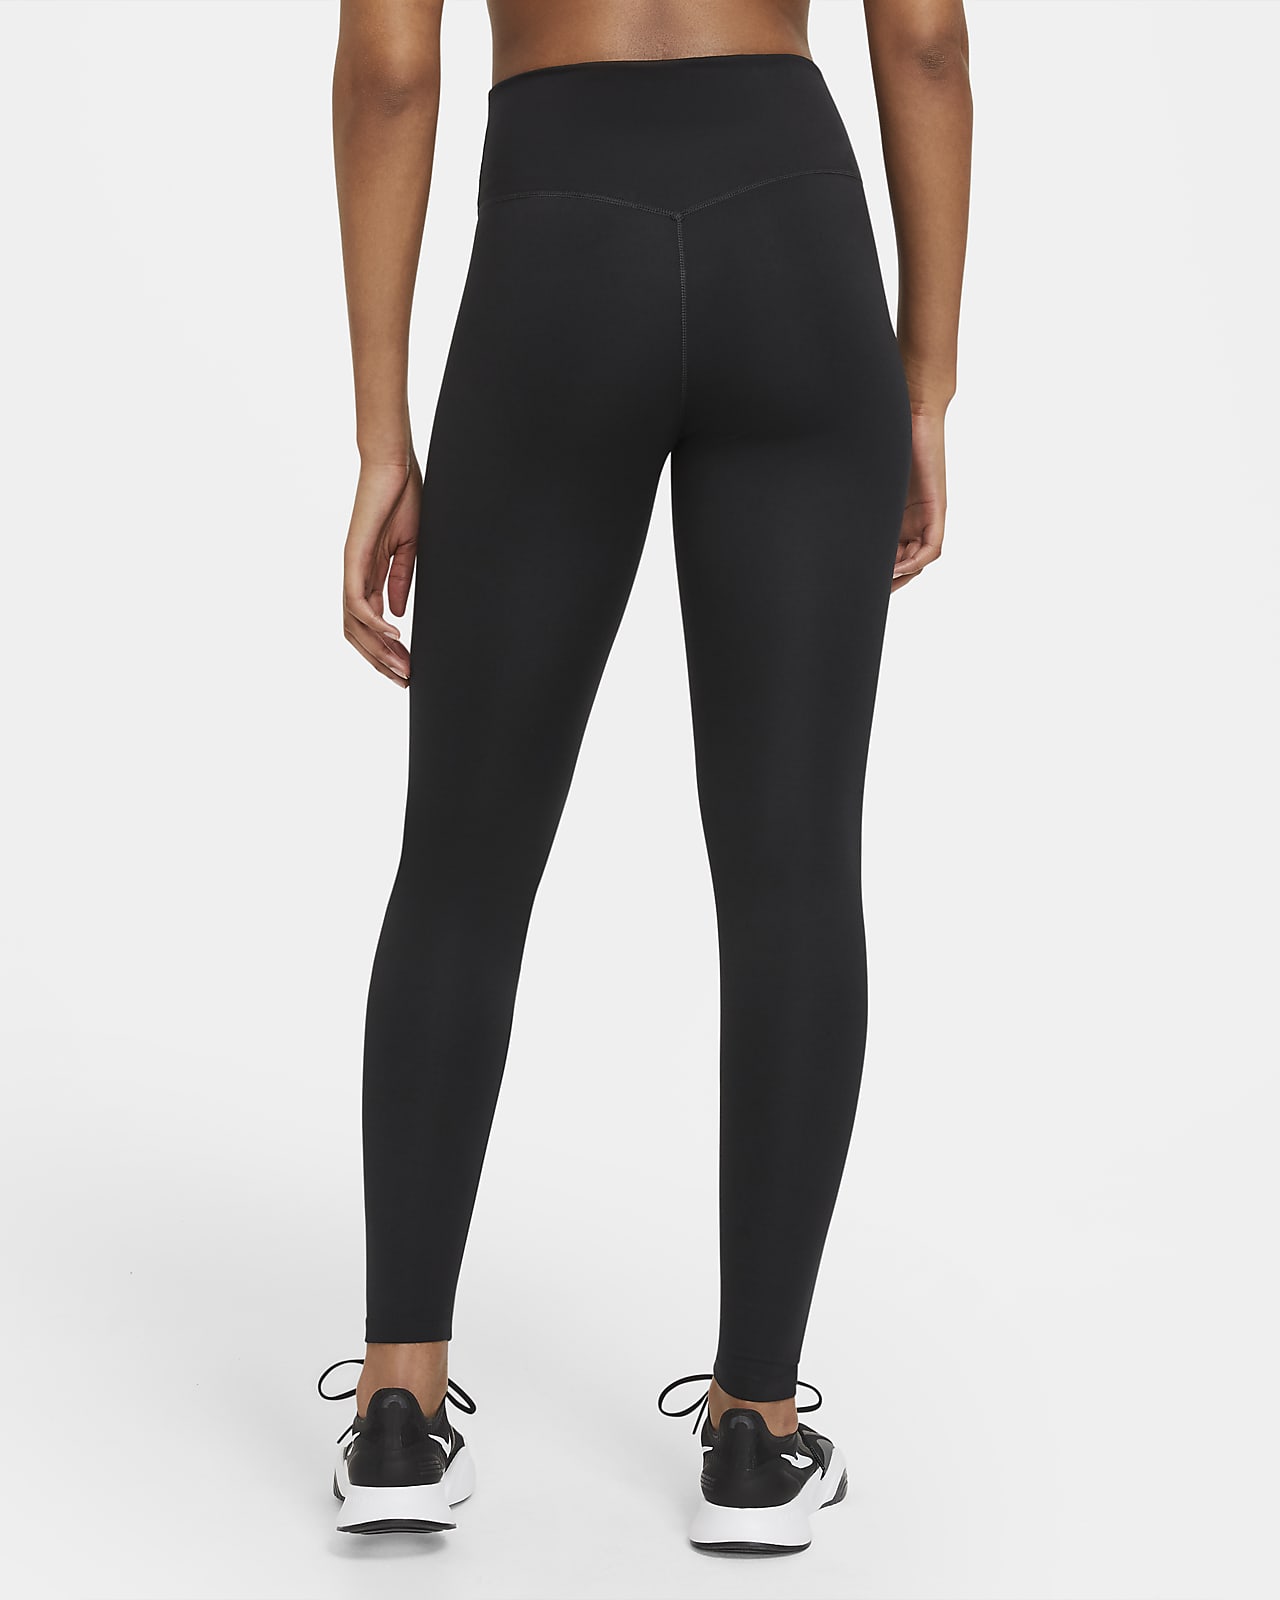 women's nike dri fit black leggings